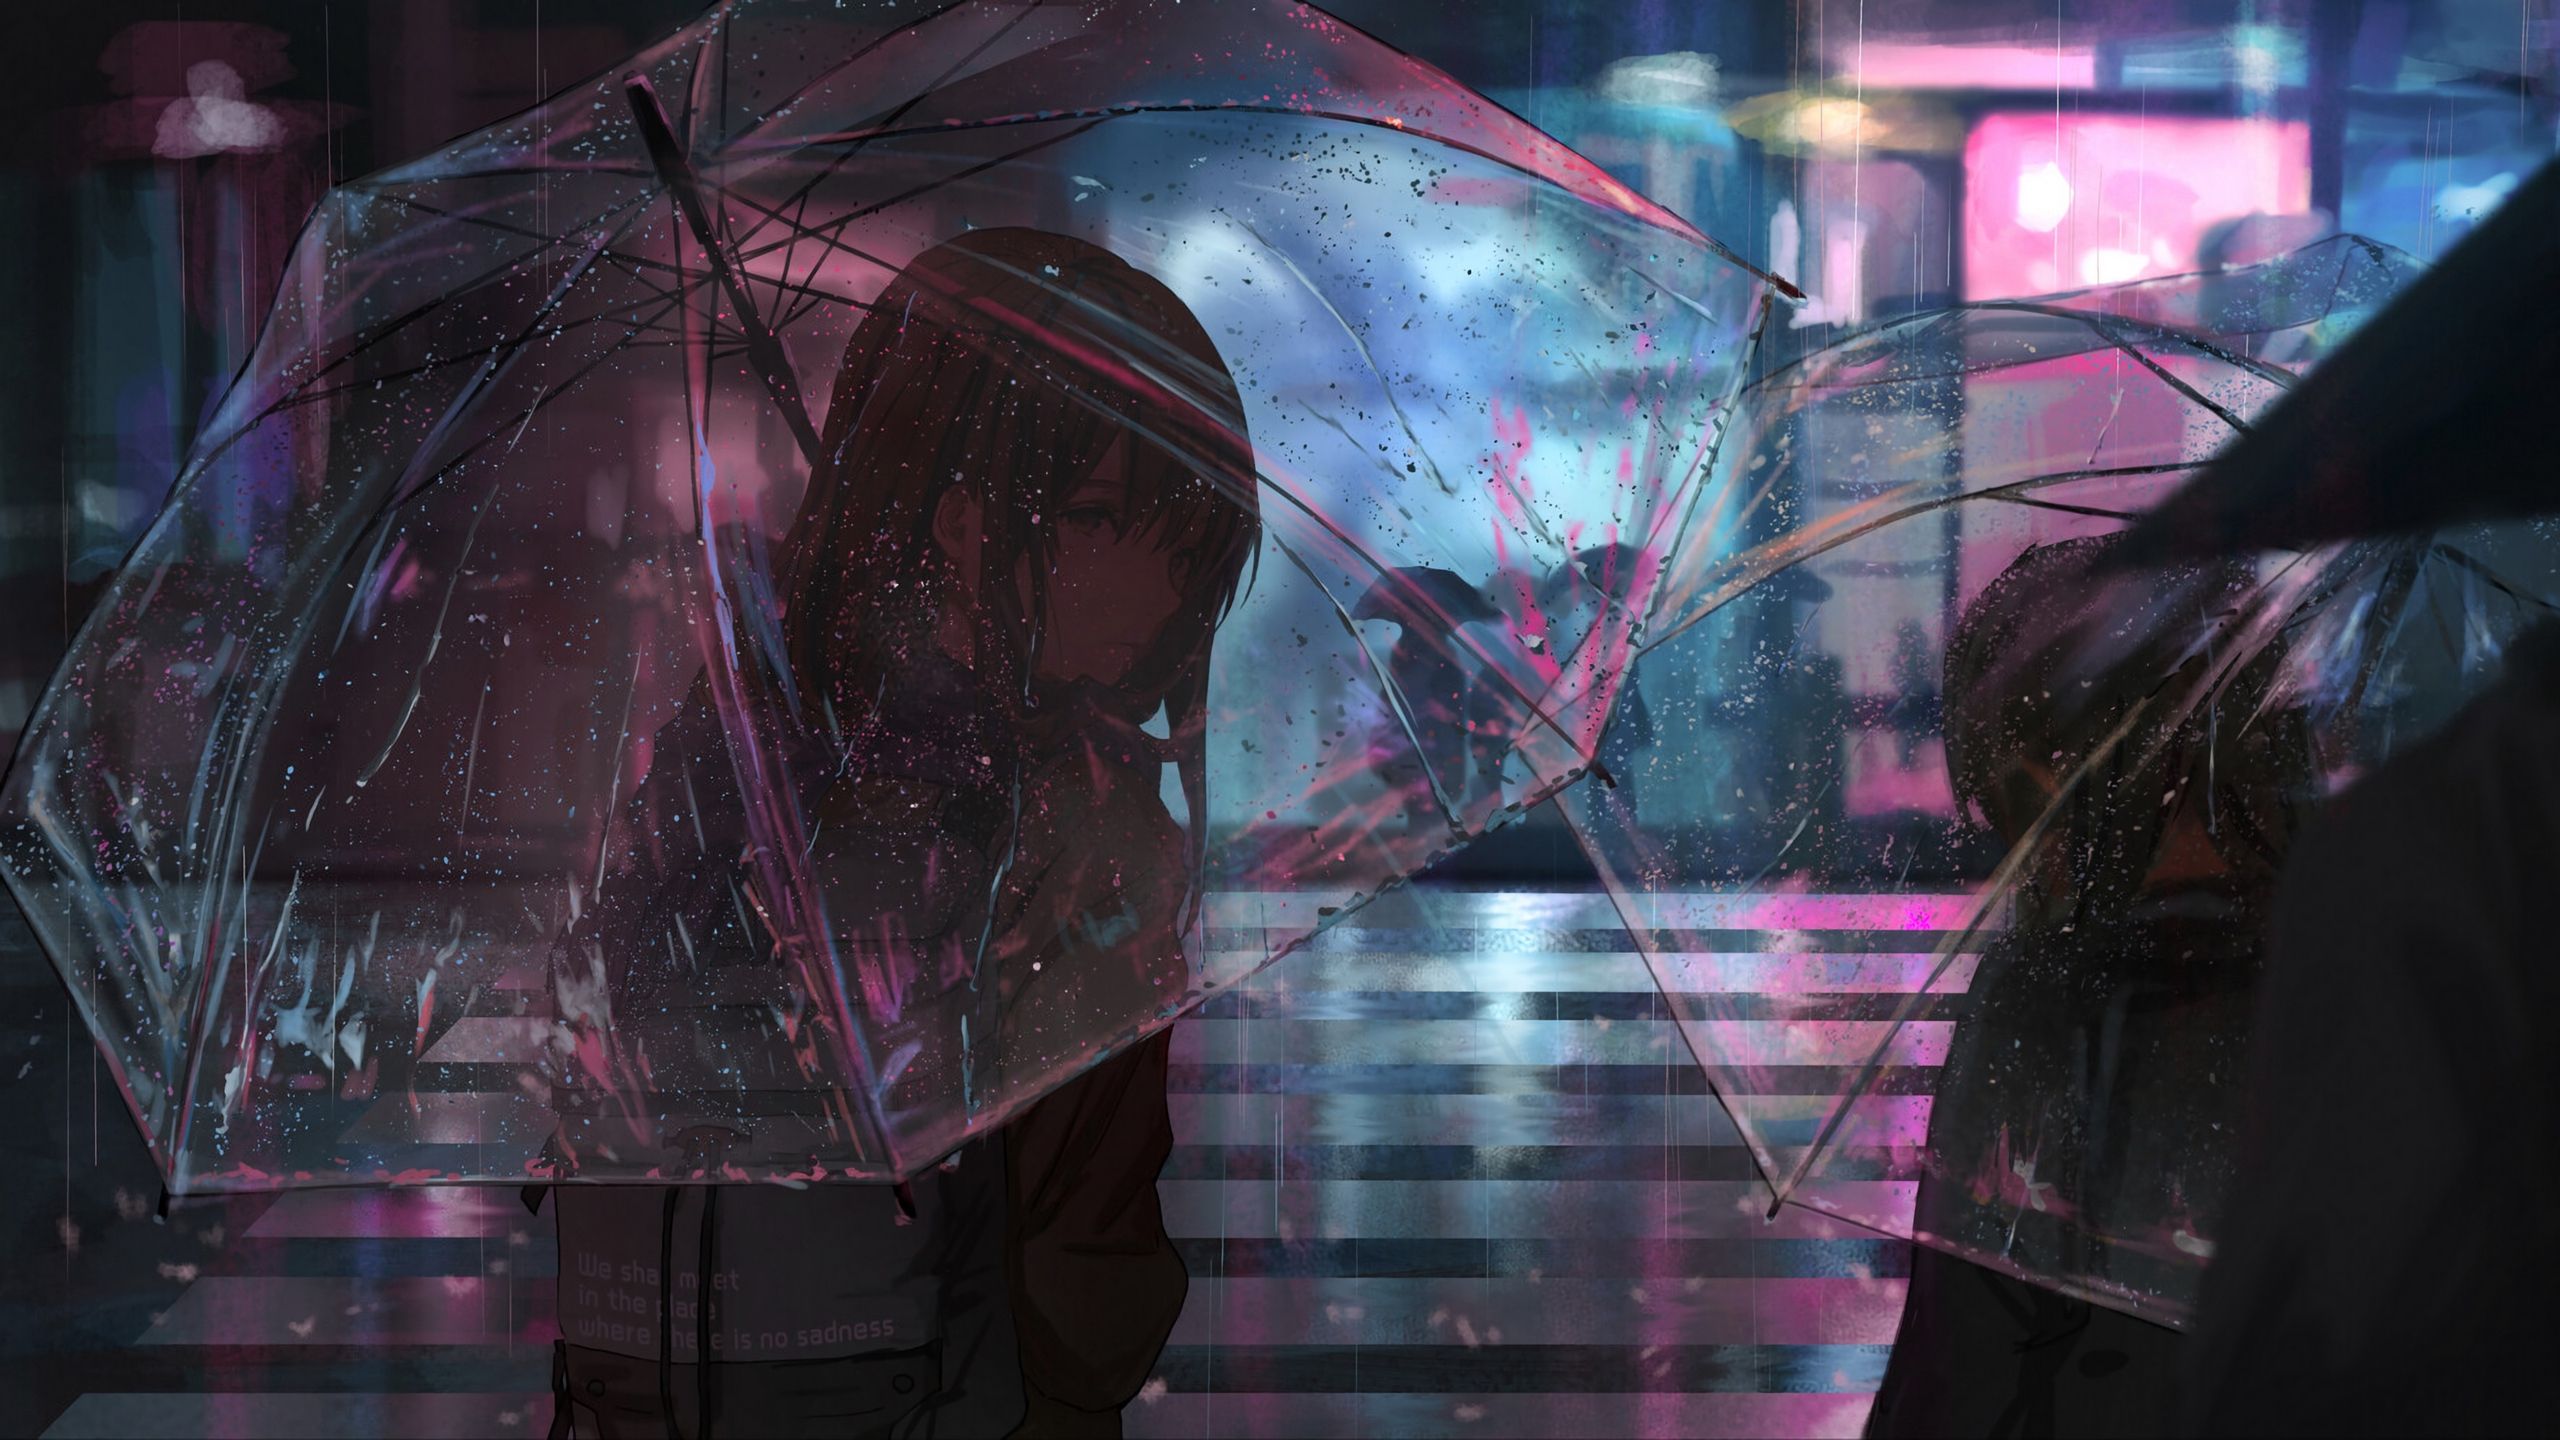 Download wallpaper 2560x1440 girl, umbrella, anime, rain, street, night widescreen 16:9 HD background